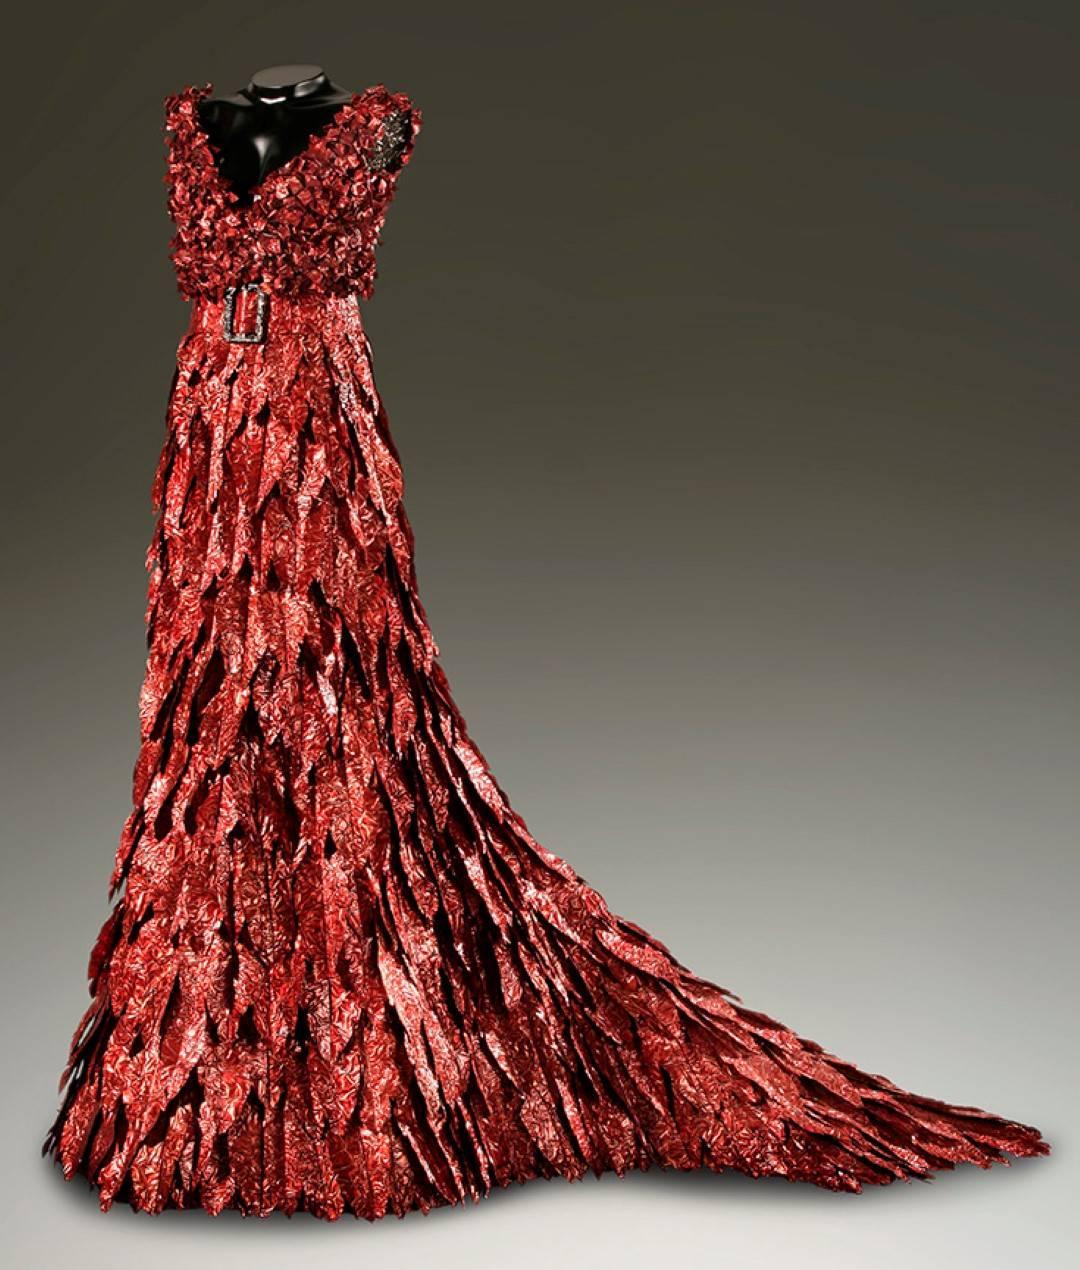 John Petrey Figurative Sculpture - 'Genevieve' Mixed Media, Found Object Sculpture of a Red Dress